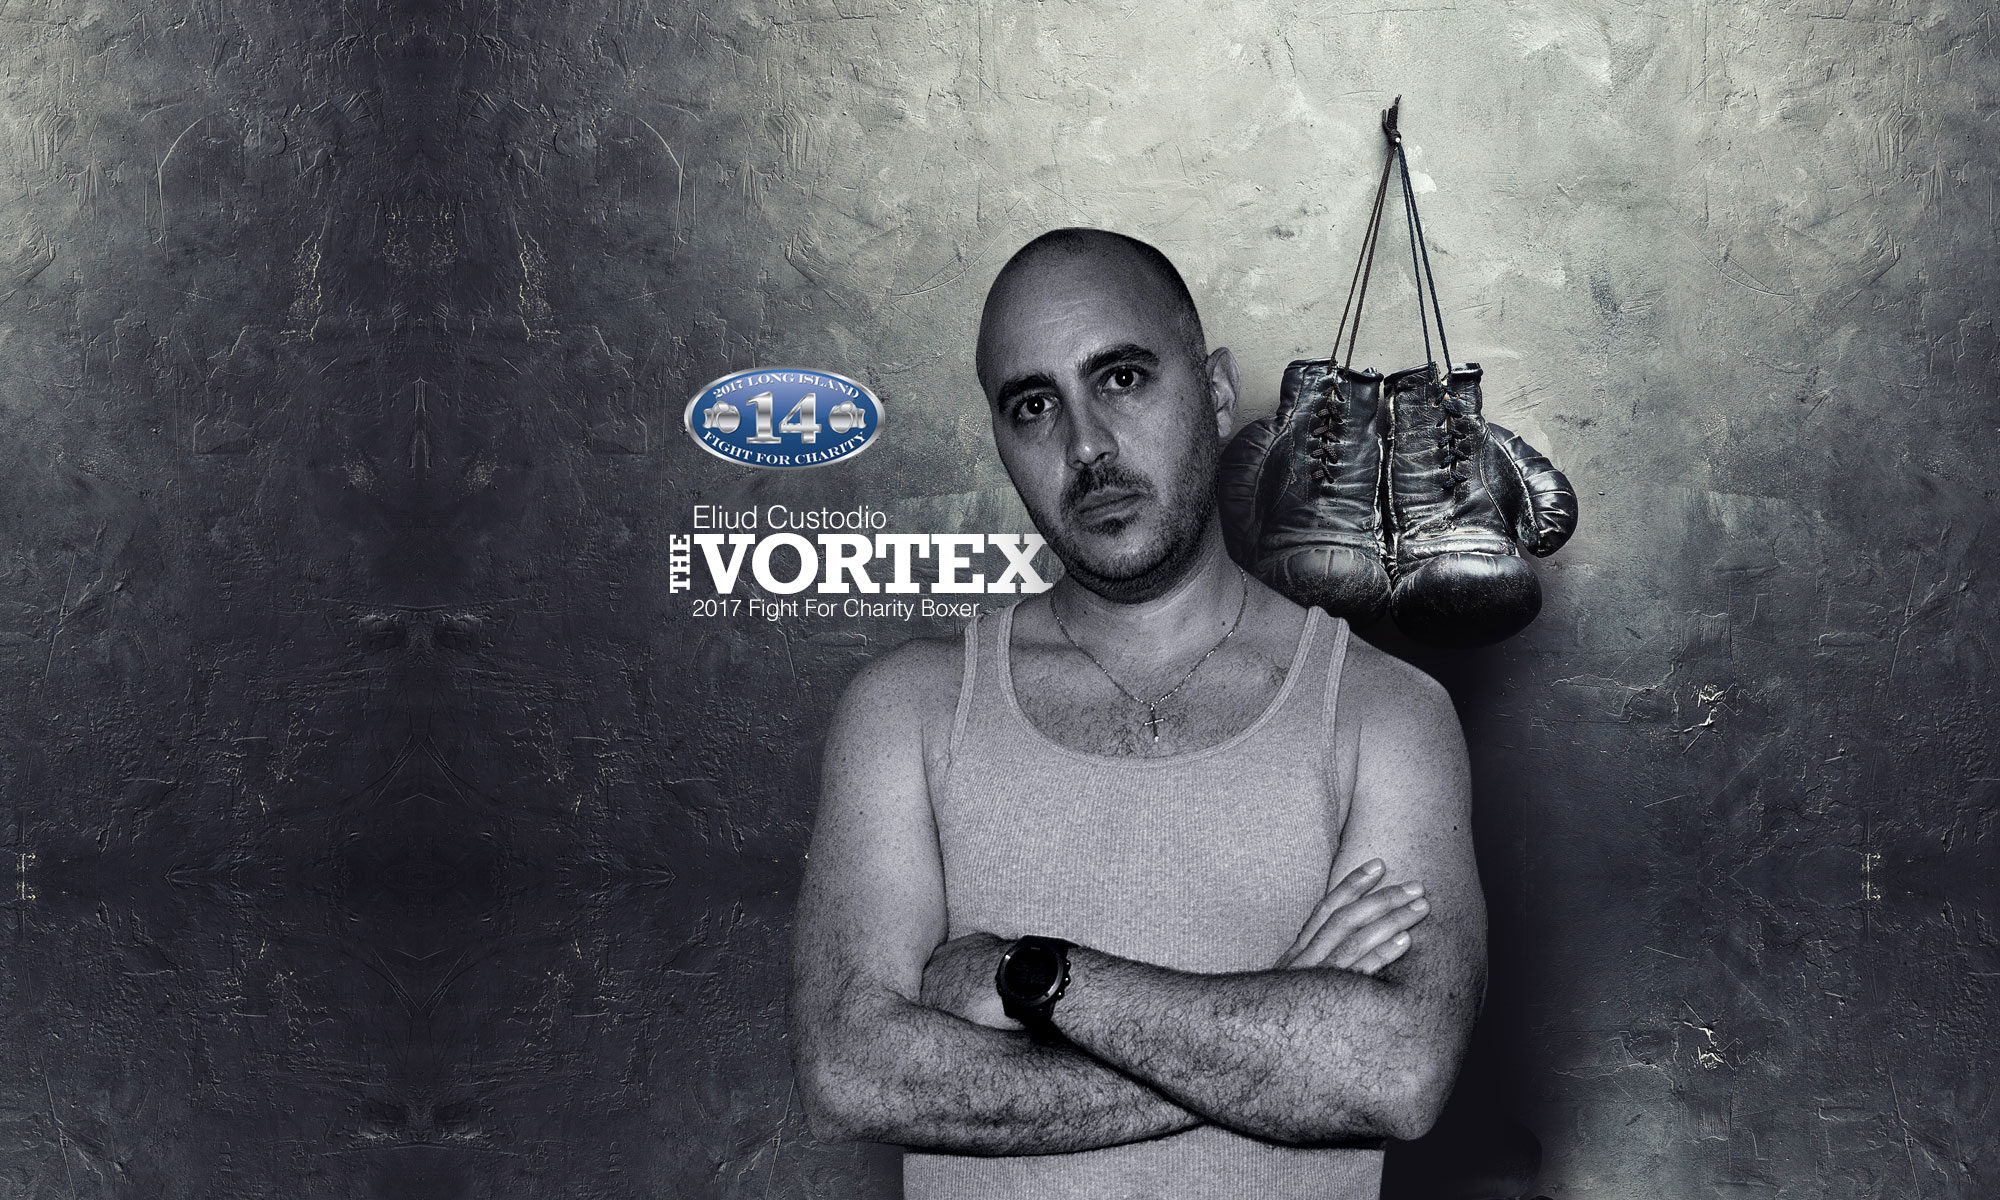 Eliud "The Vortex" Custodio - 2017 Fight For Charity Boxer